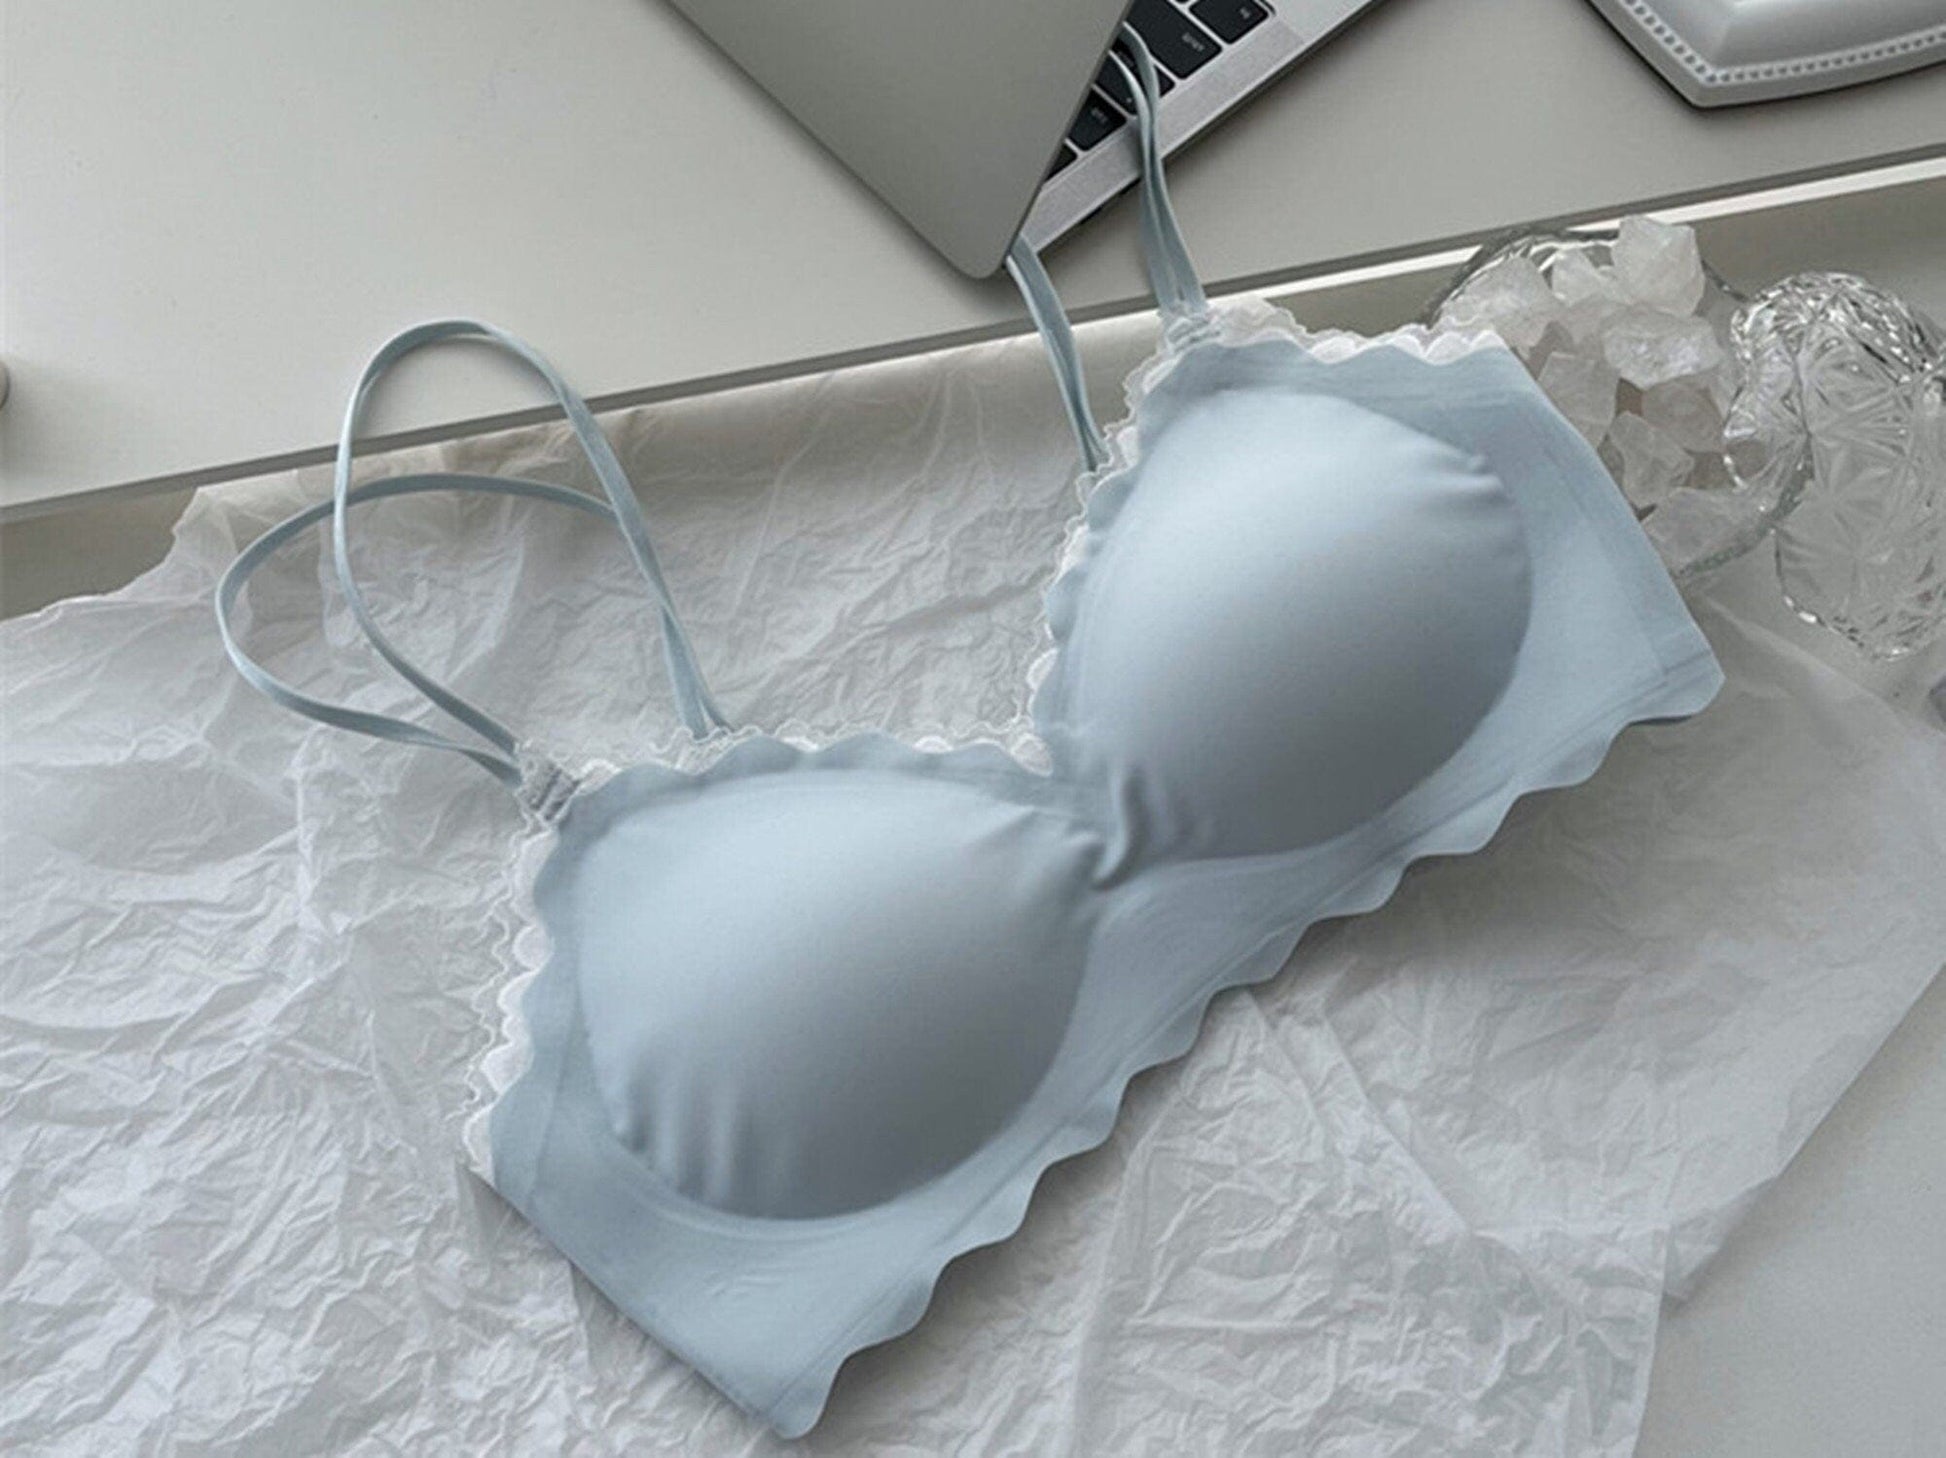 Alpha C Seamless Smooth Wireless lingerie Comfort Thin Padded Support Bralette Push up bra for small breast bra LingerieSetArt Blue / S US women's letter